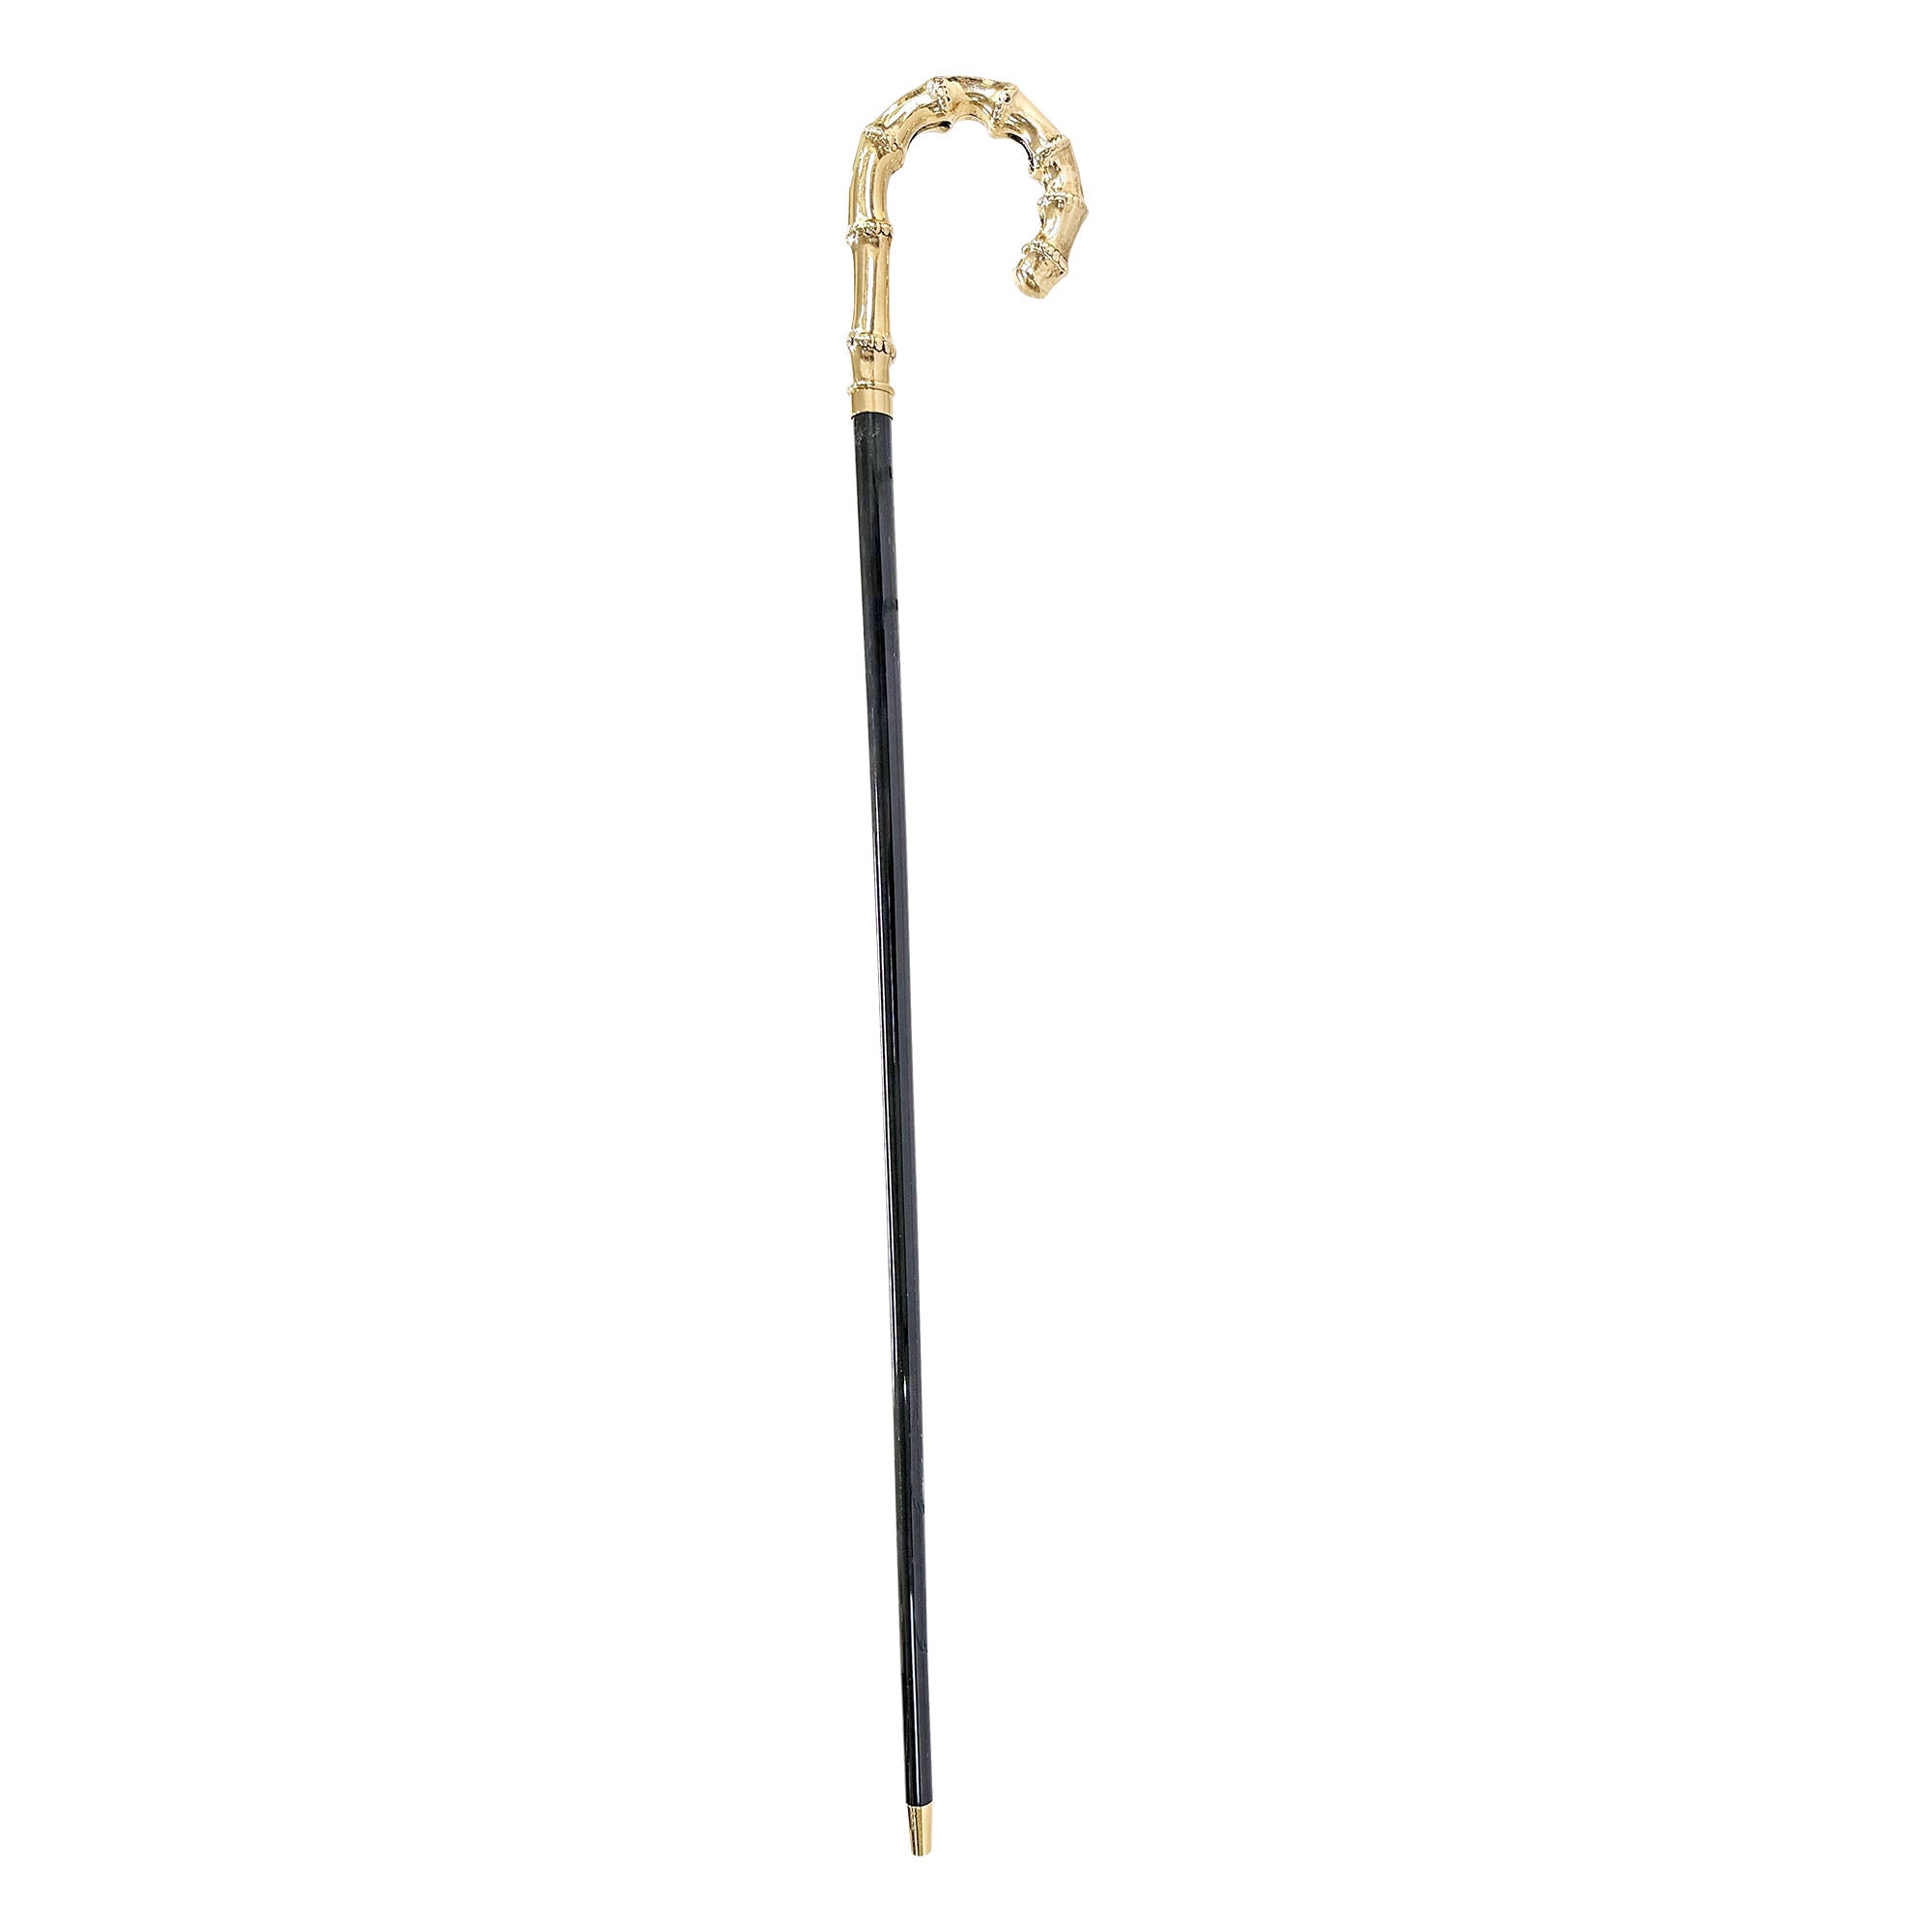 Bamboo-shaped walking stick - Goldplated 24K